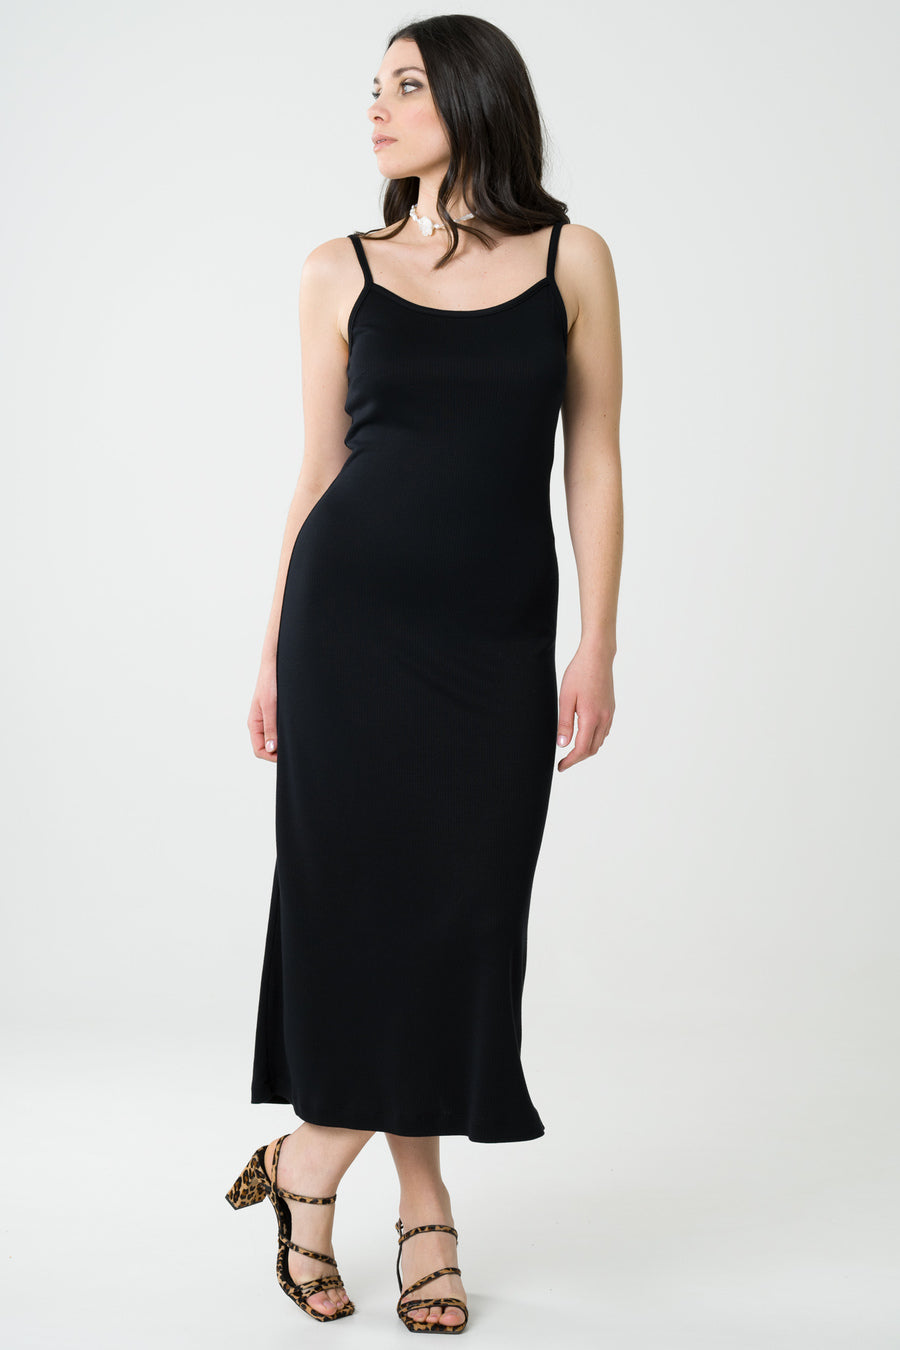 Black dress Hortensia made of Tencel by Avani